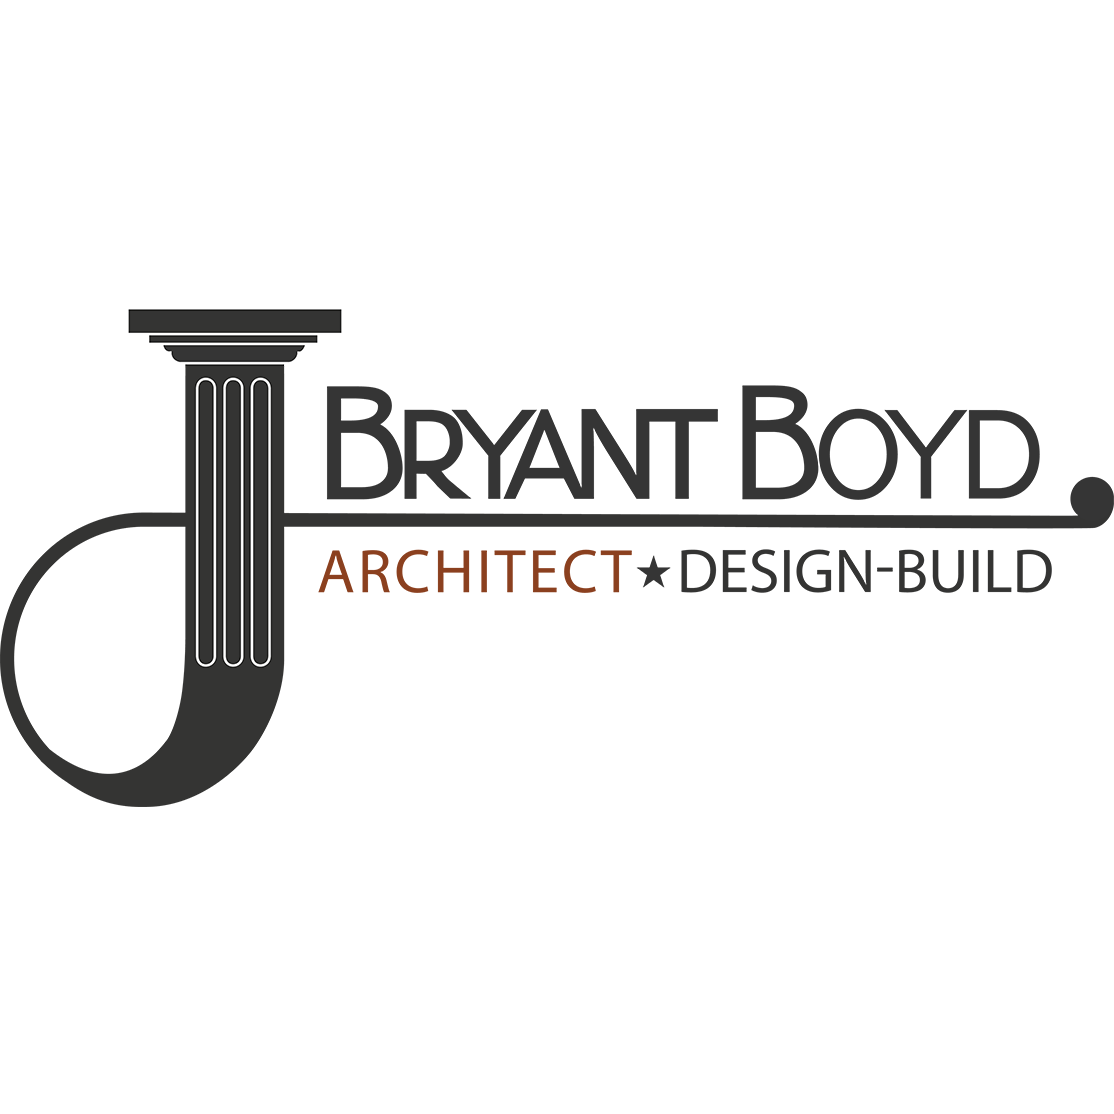 J Bryant Boyd Architect Design-Build Logo